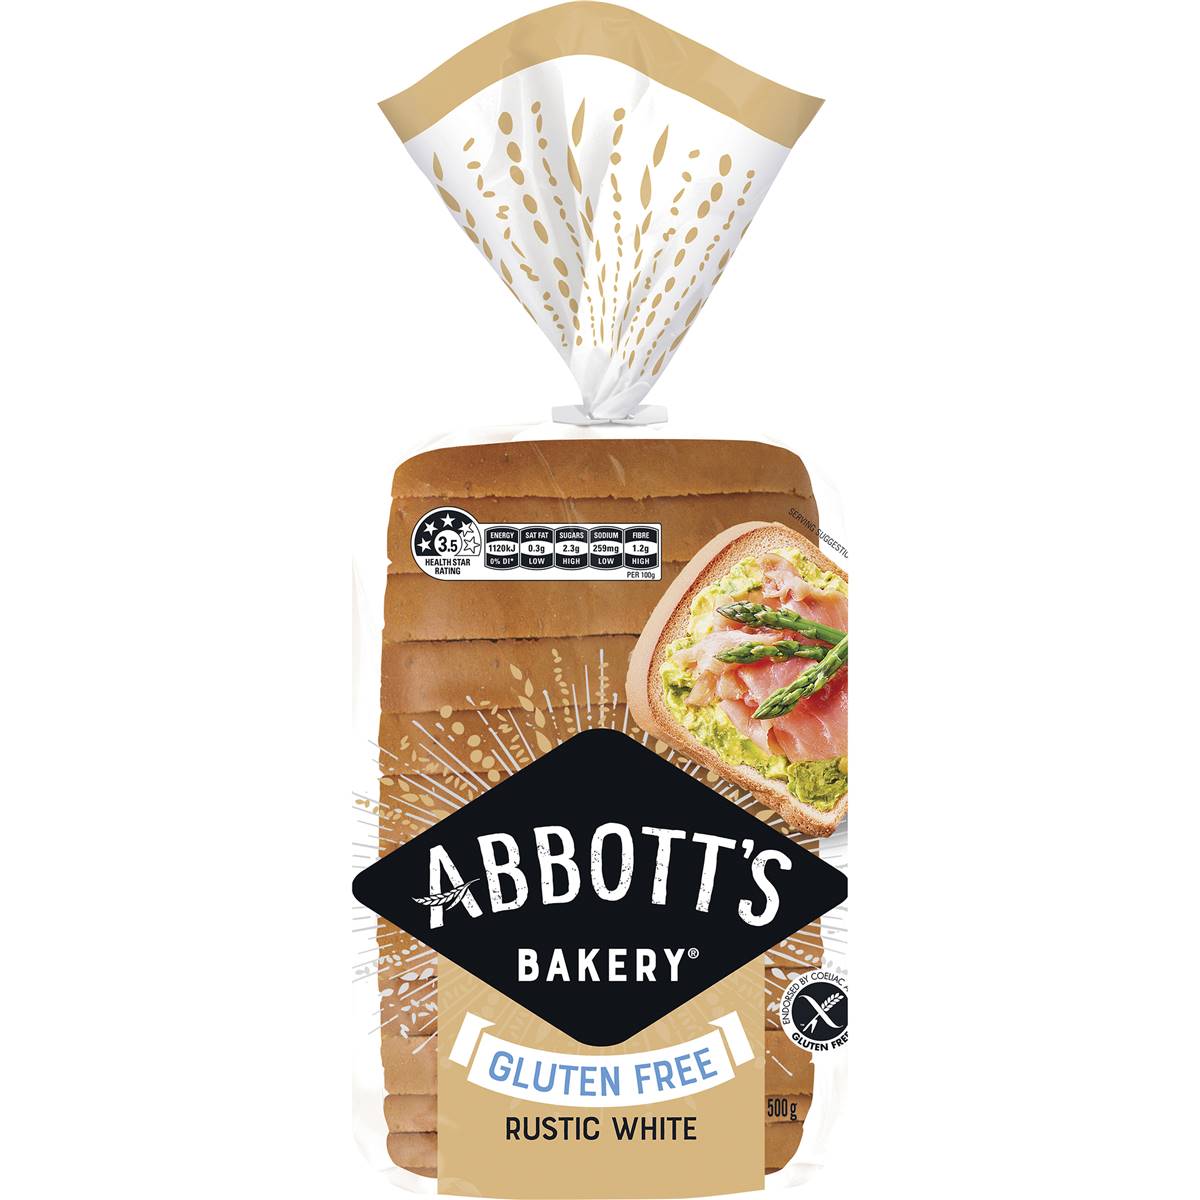 Calories in Abbott's Bakery Gluten Free Rustic White Bread Slice Loaf